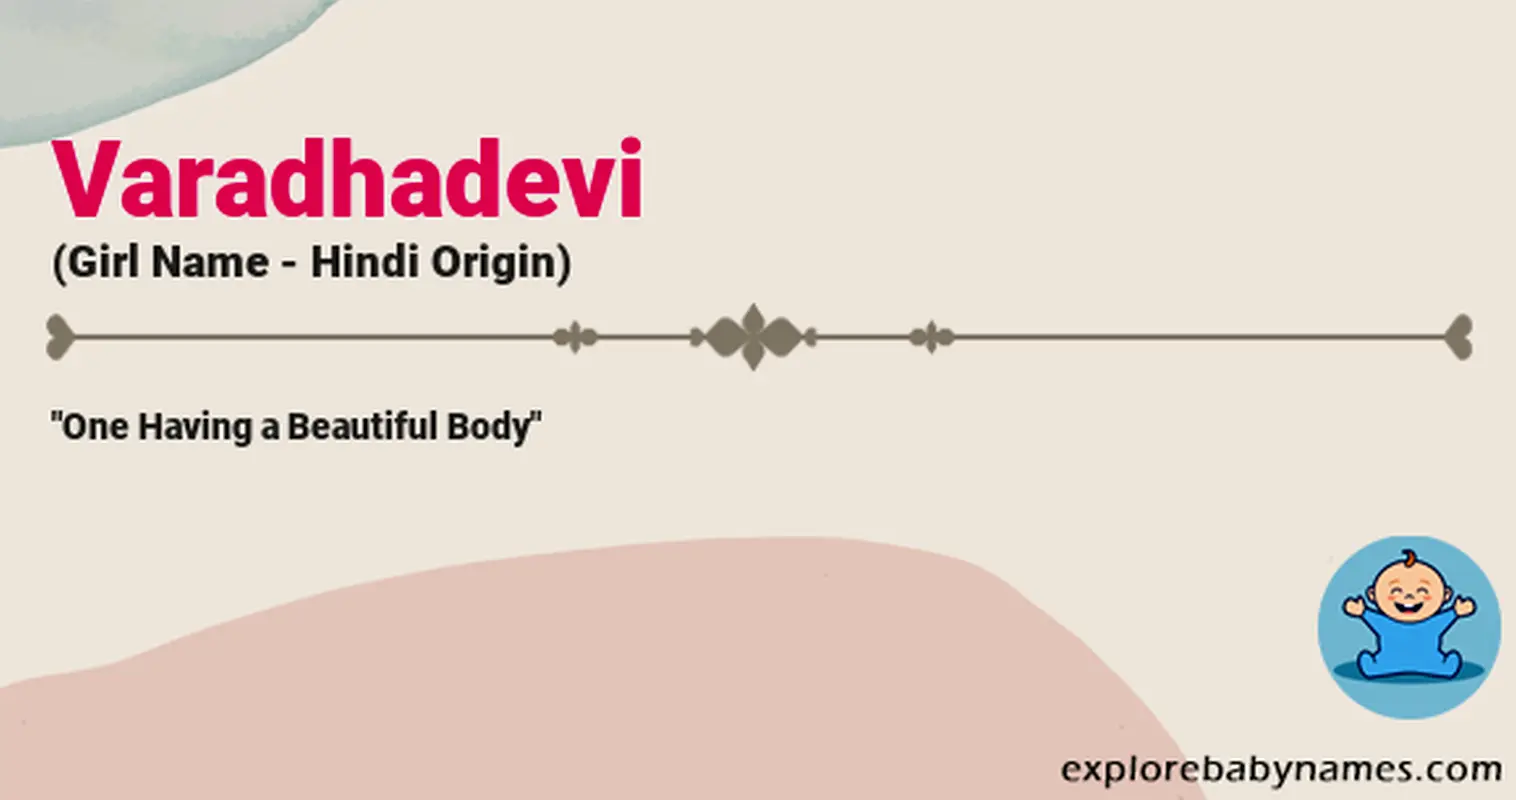 Meaning of Varadhadevi